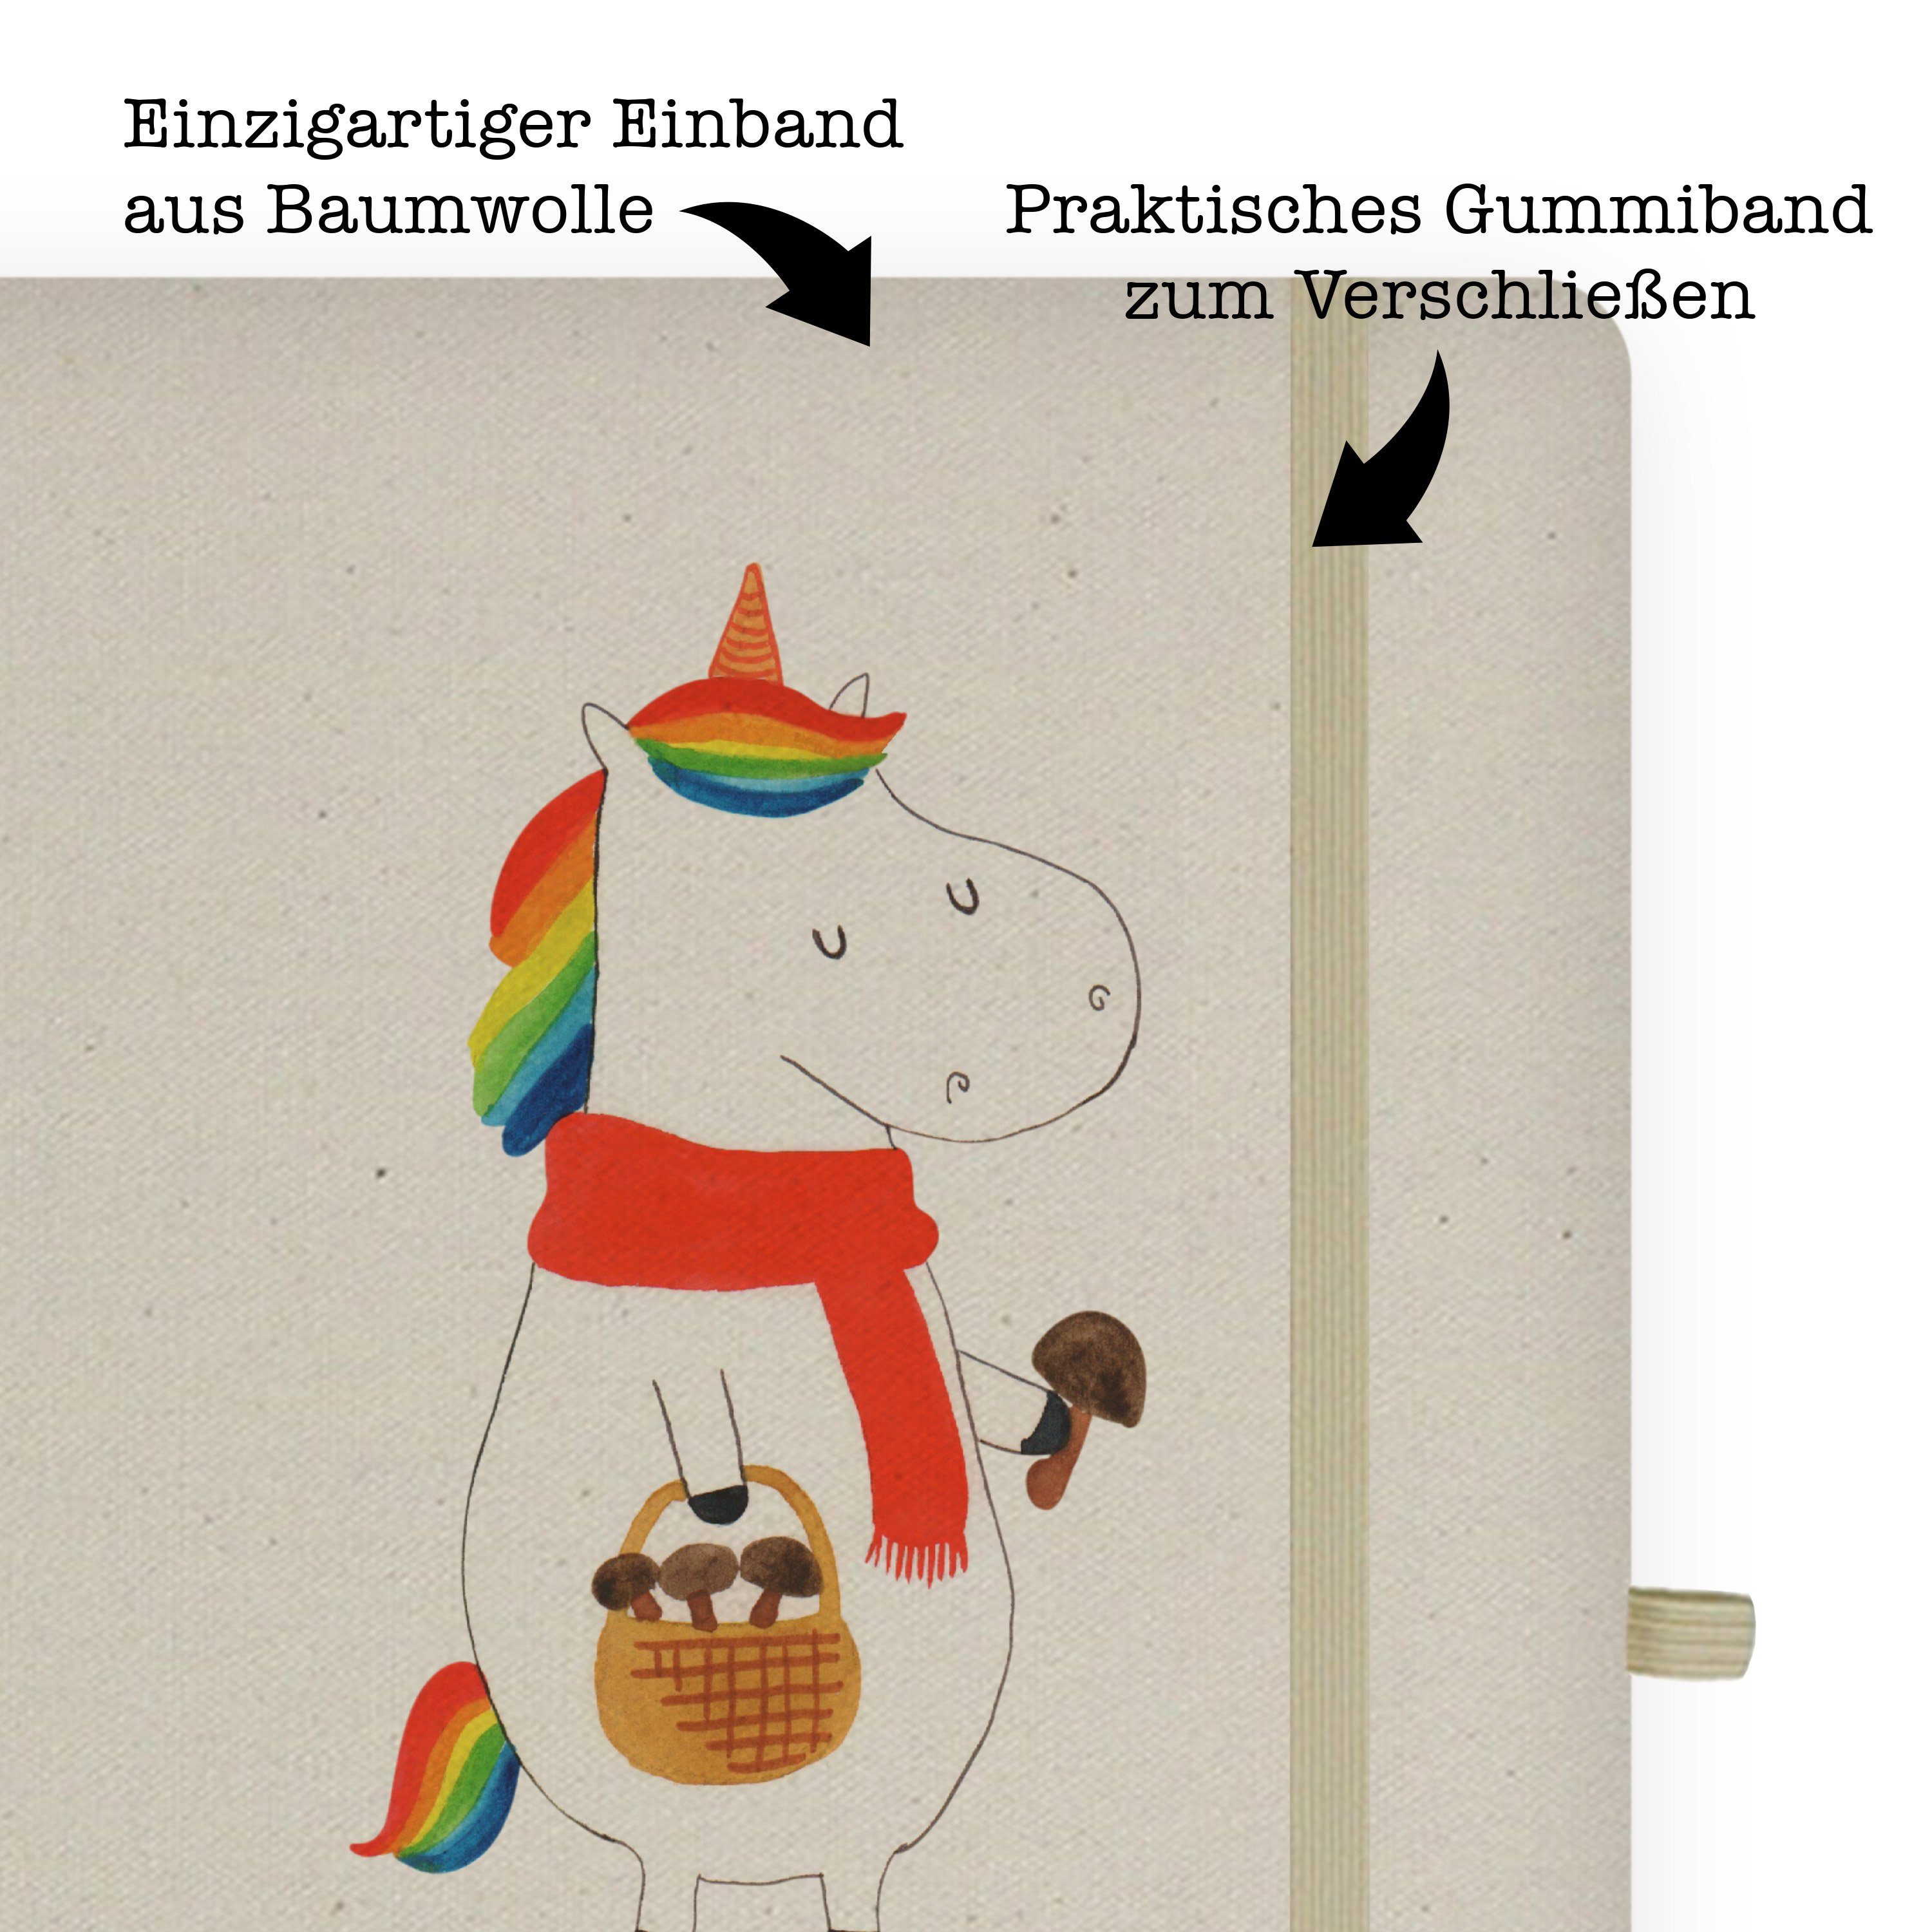 Panda Einhorn & Transparent Einhorn Geschenk, - Pilz Liebesk Panda Mrs. Mr. & Deko, Mr. Notizen, Notizbuch Mrs. -